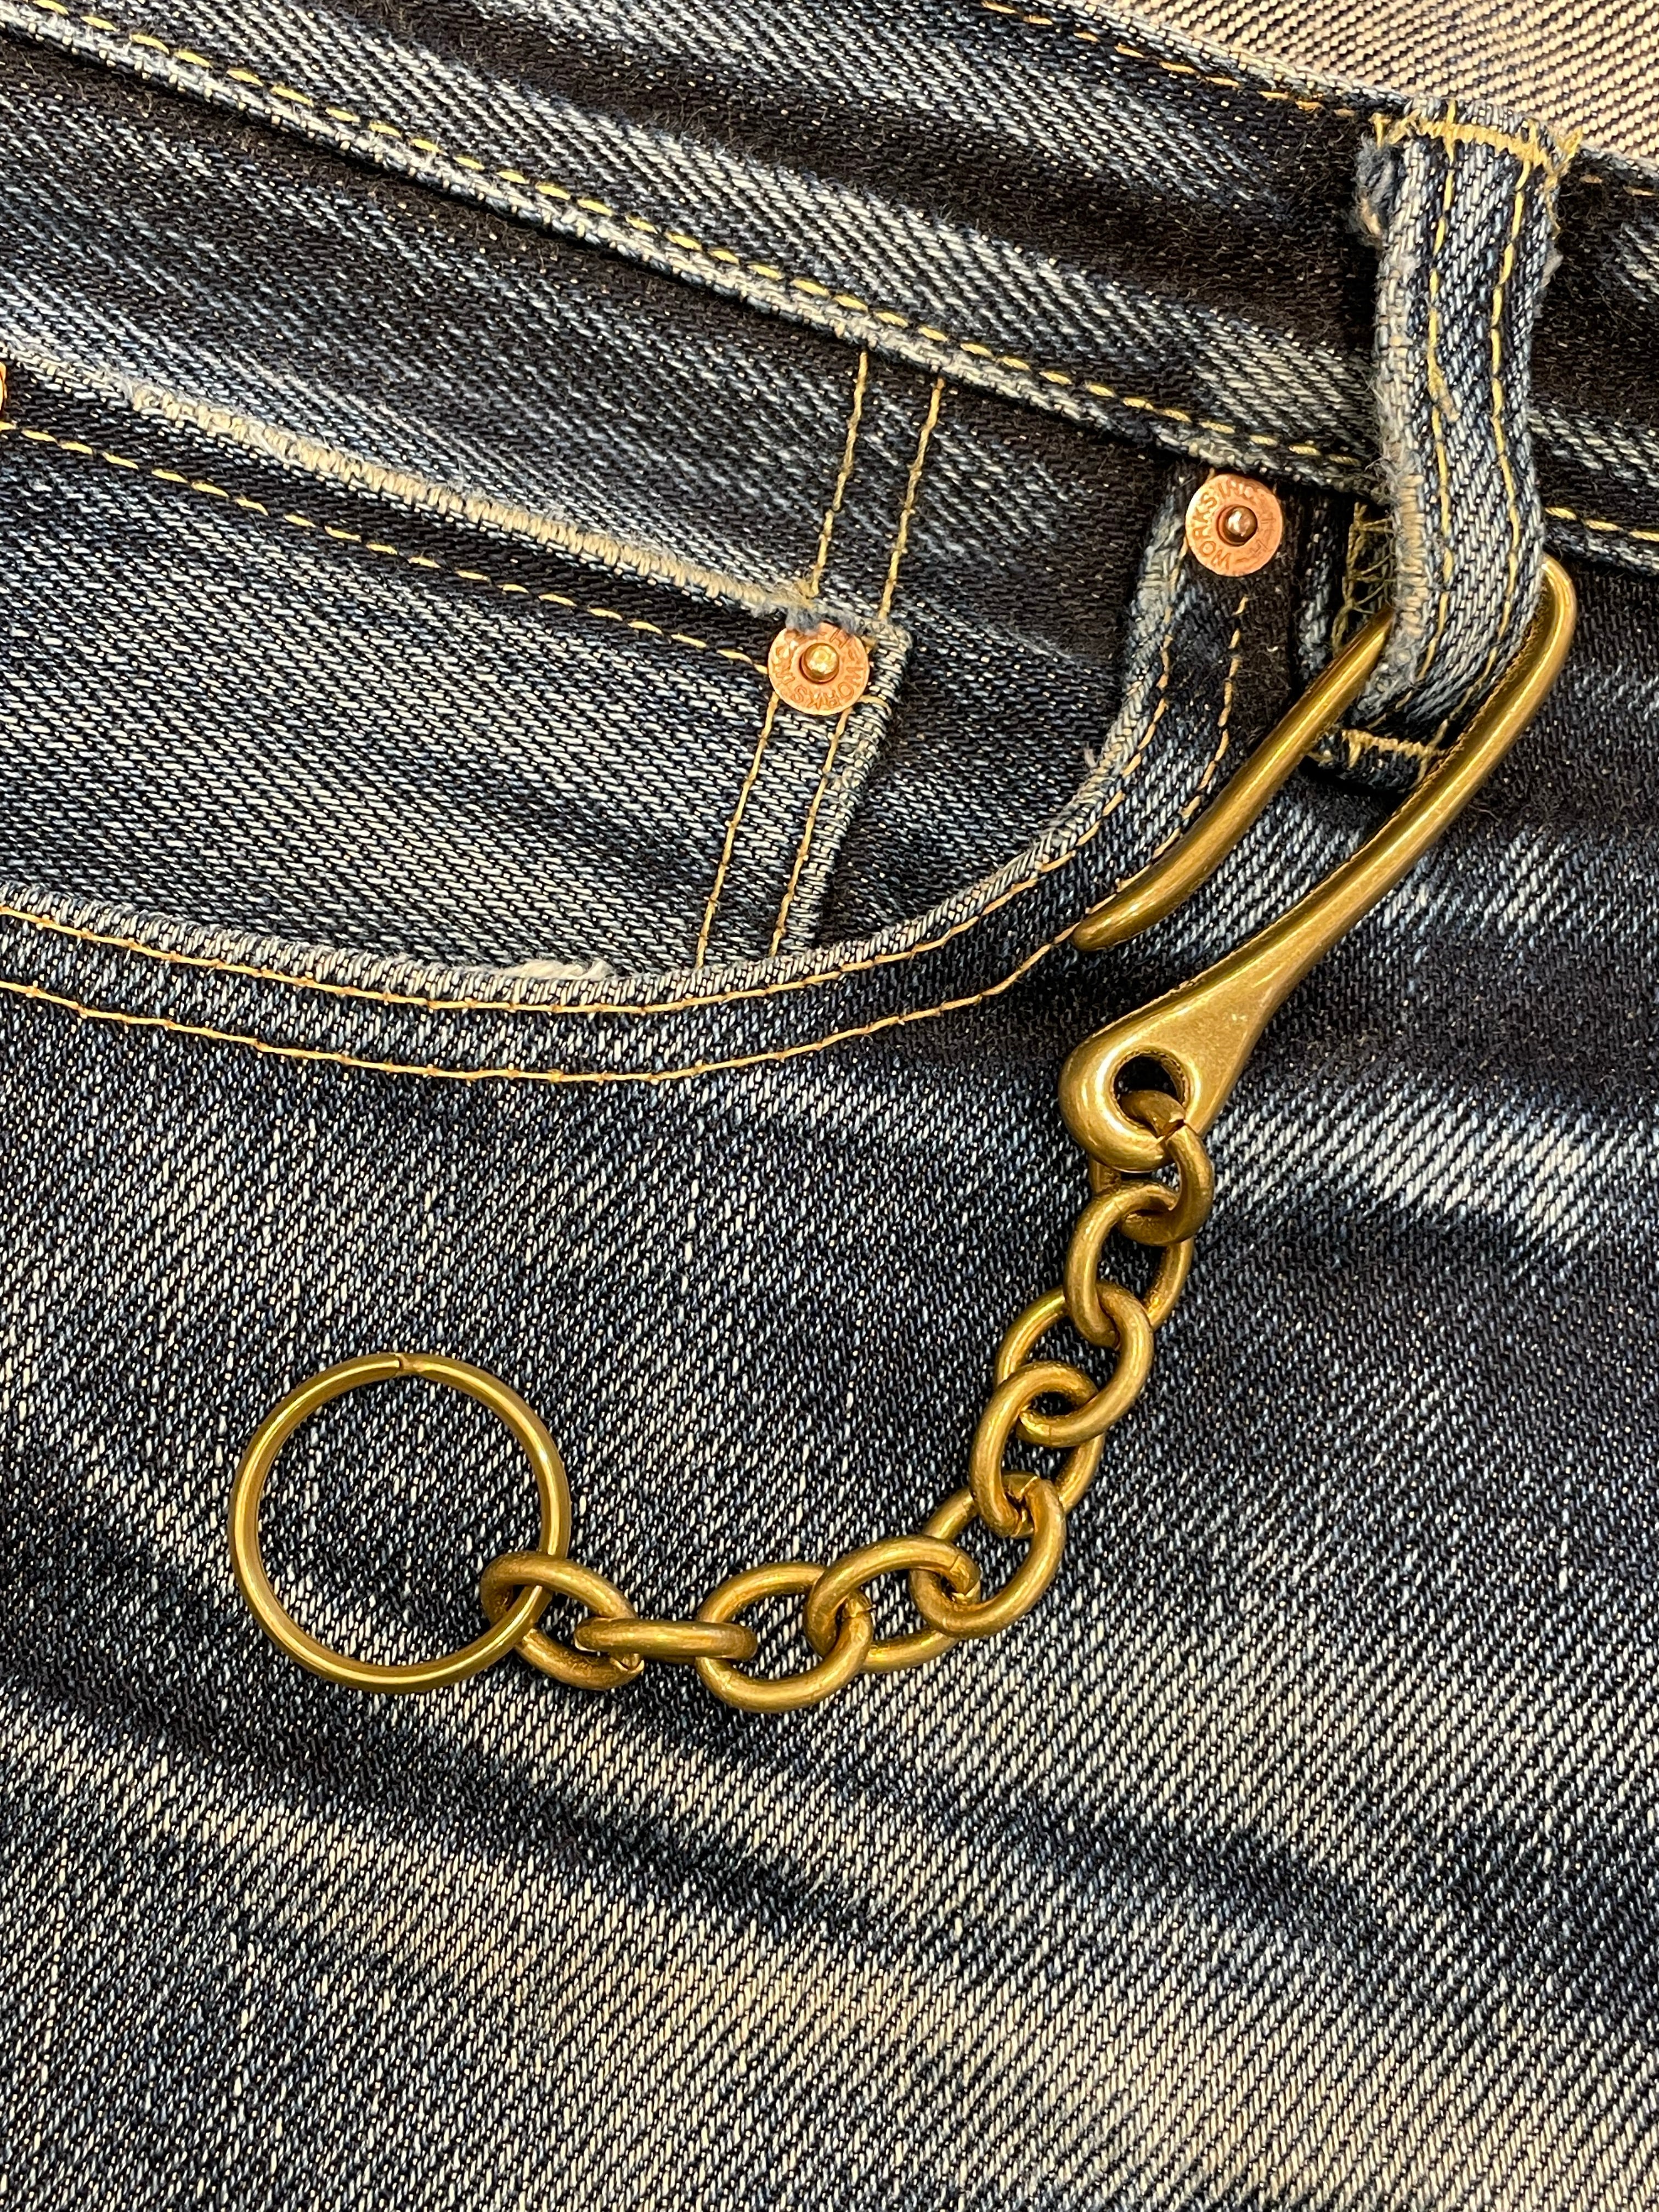 Kobashi Handmade Fishhook Belt Chain - Solid Brass